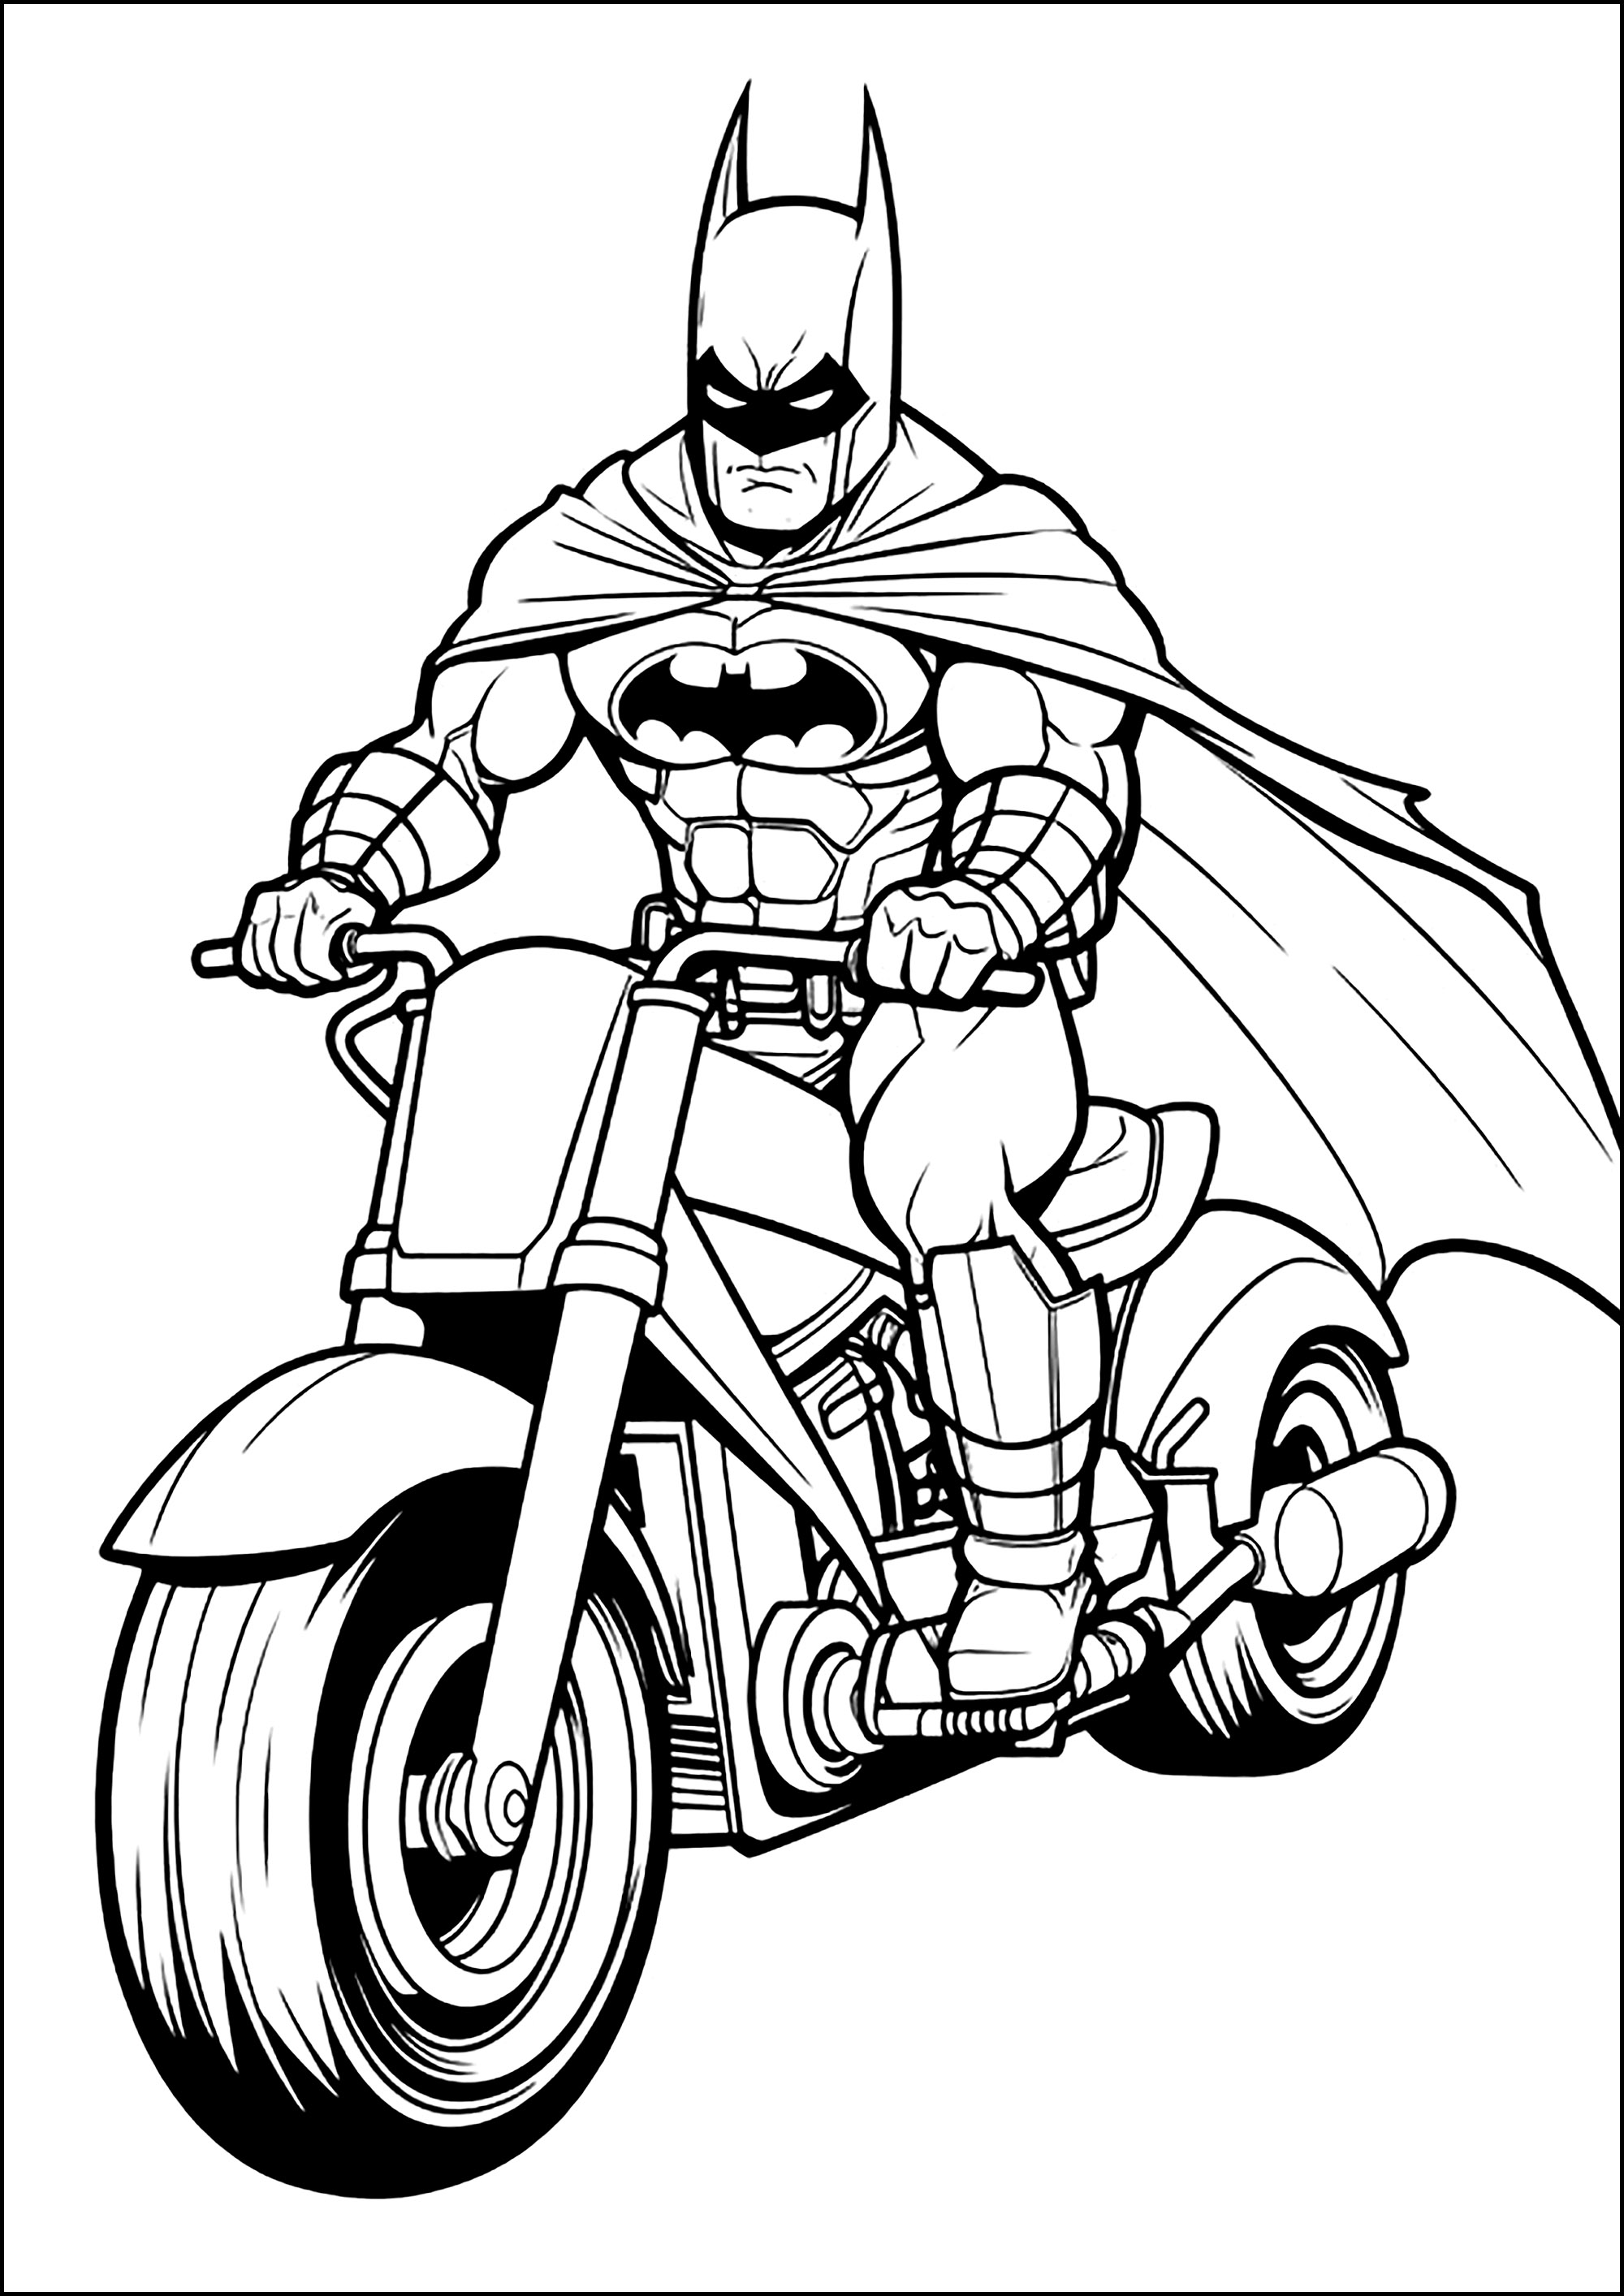 Batman sur sa moto